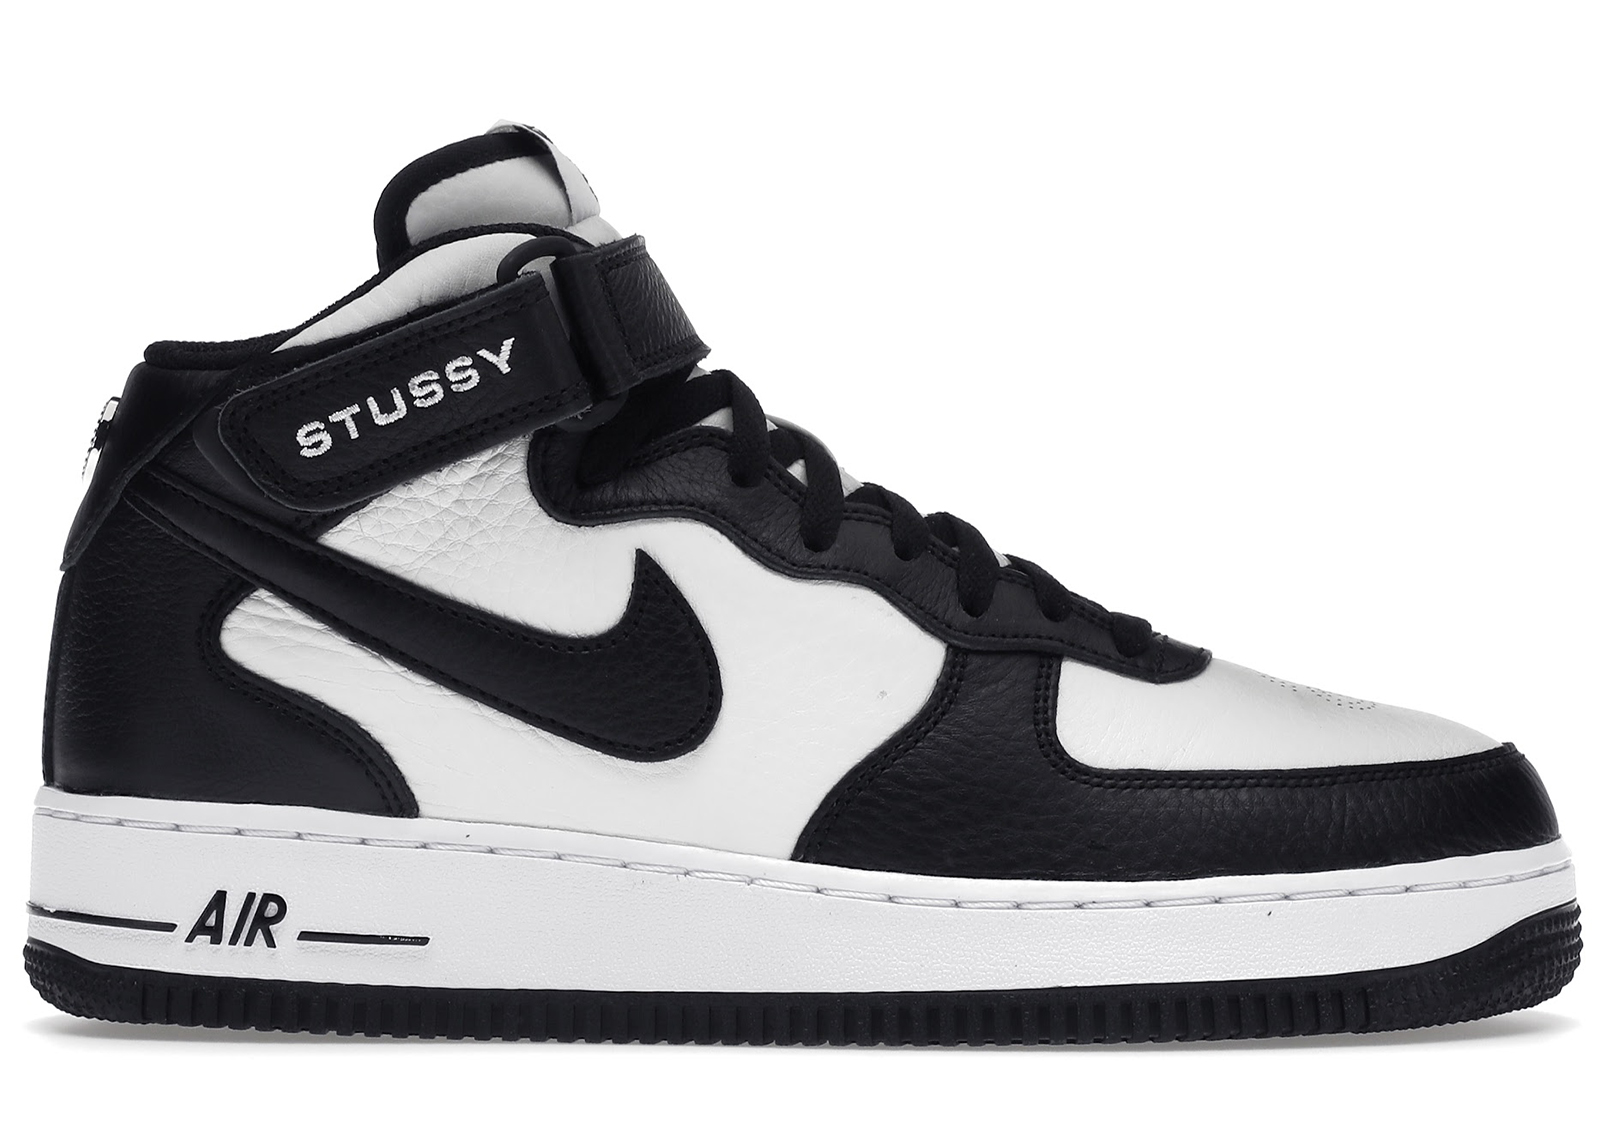 27cm】Stussy Nike Air Force 1 Mid Black - スニーカー